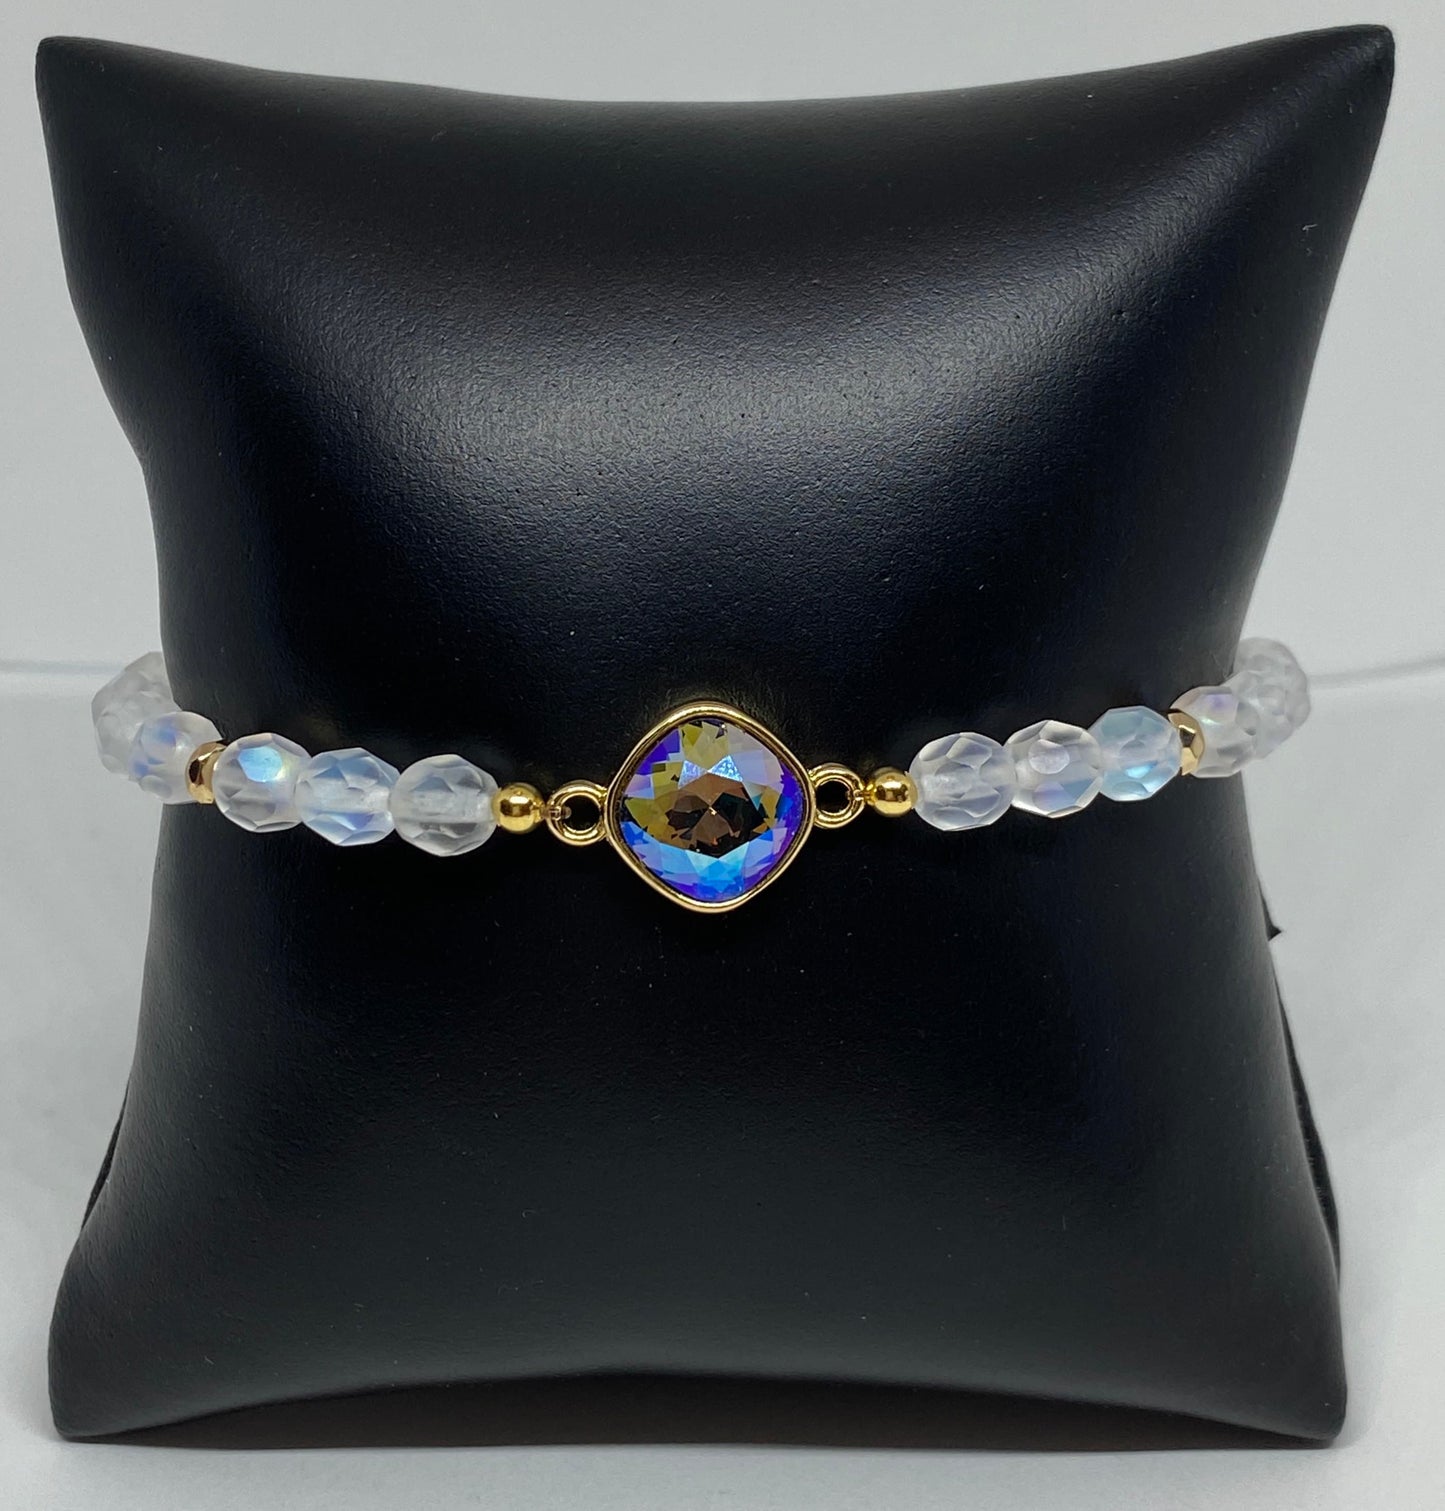 Swarovski Crystal 10mm Cushion Bracelet in Black Diamond Shimmer and Matte Opal